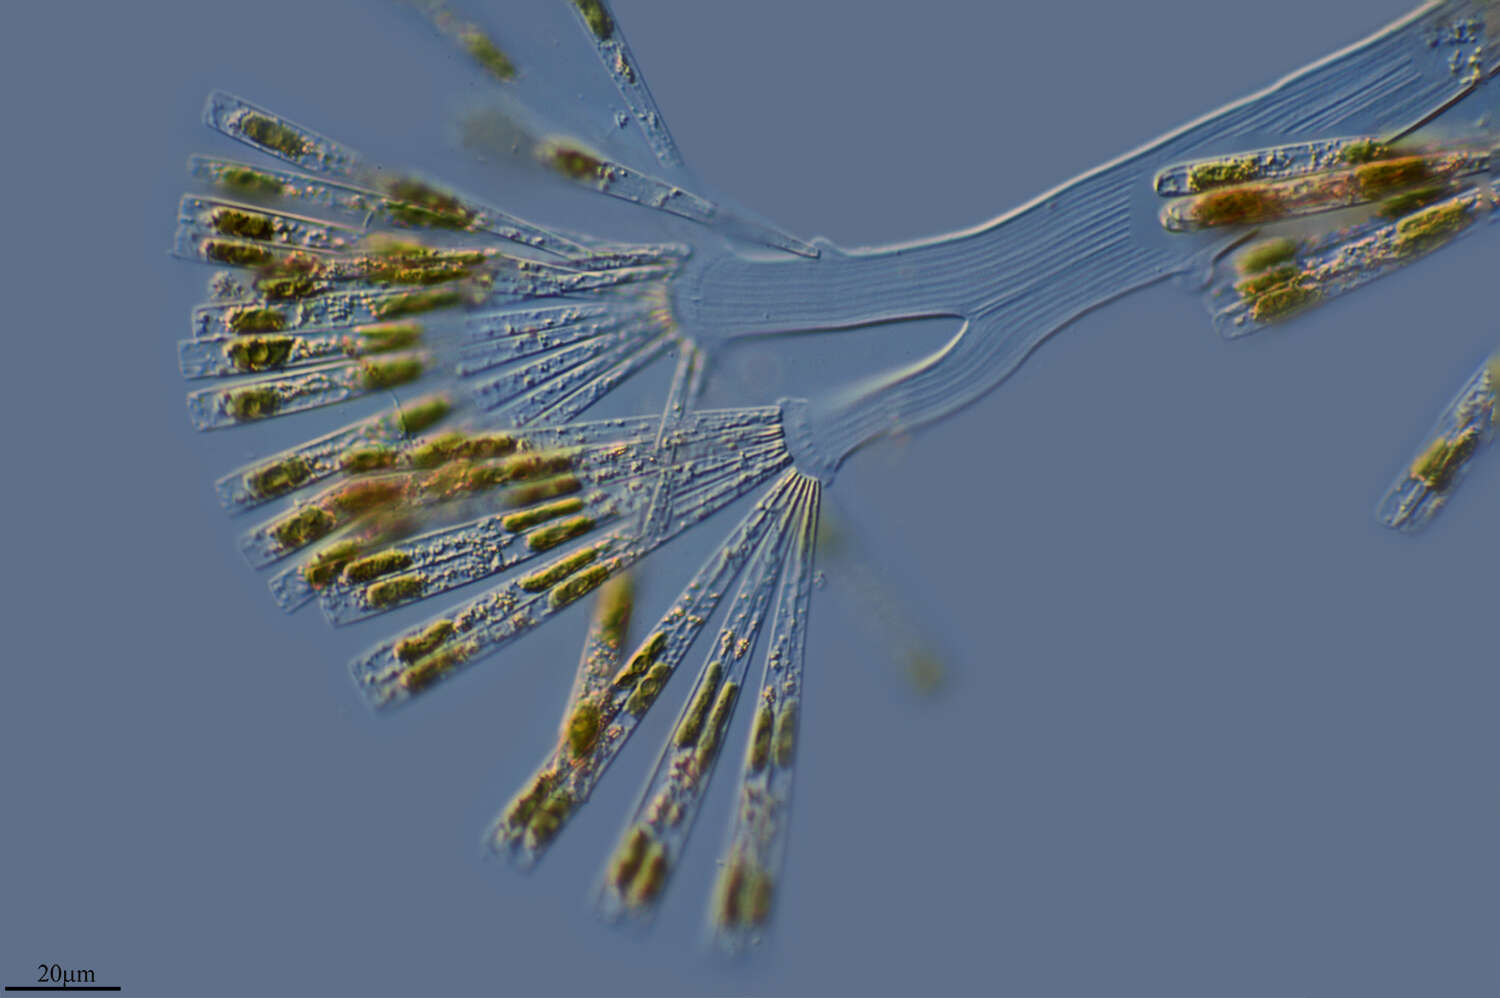 Image of Fragilariophyceae